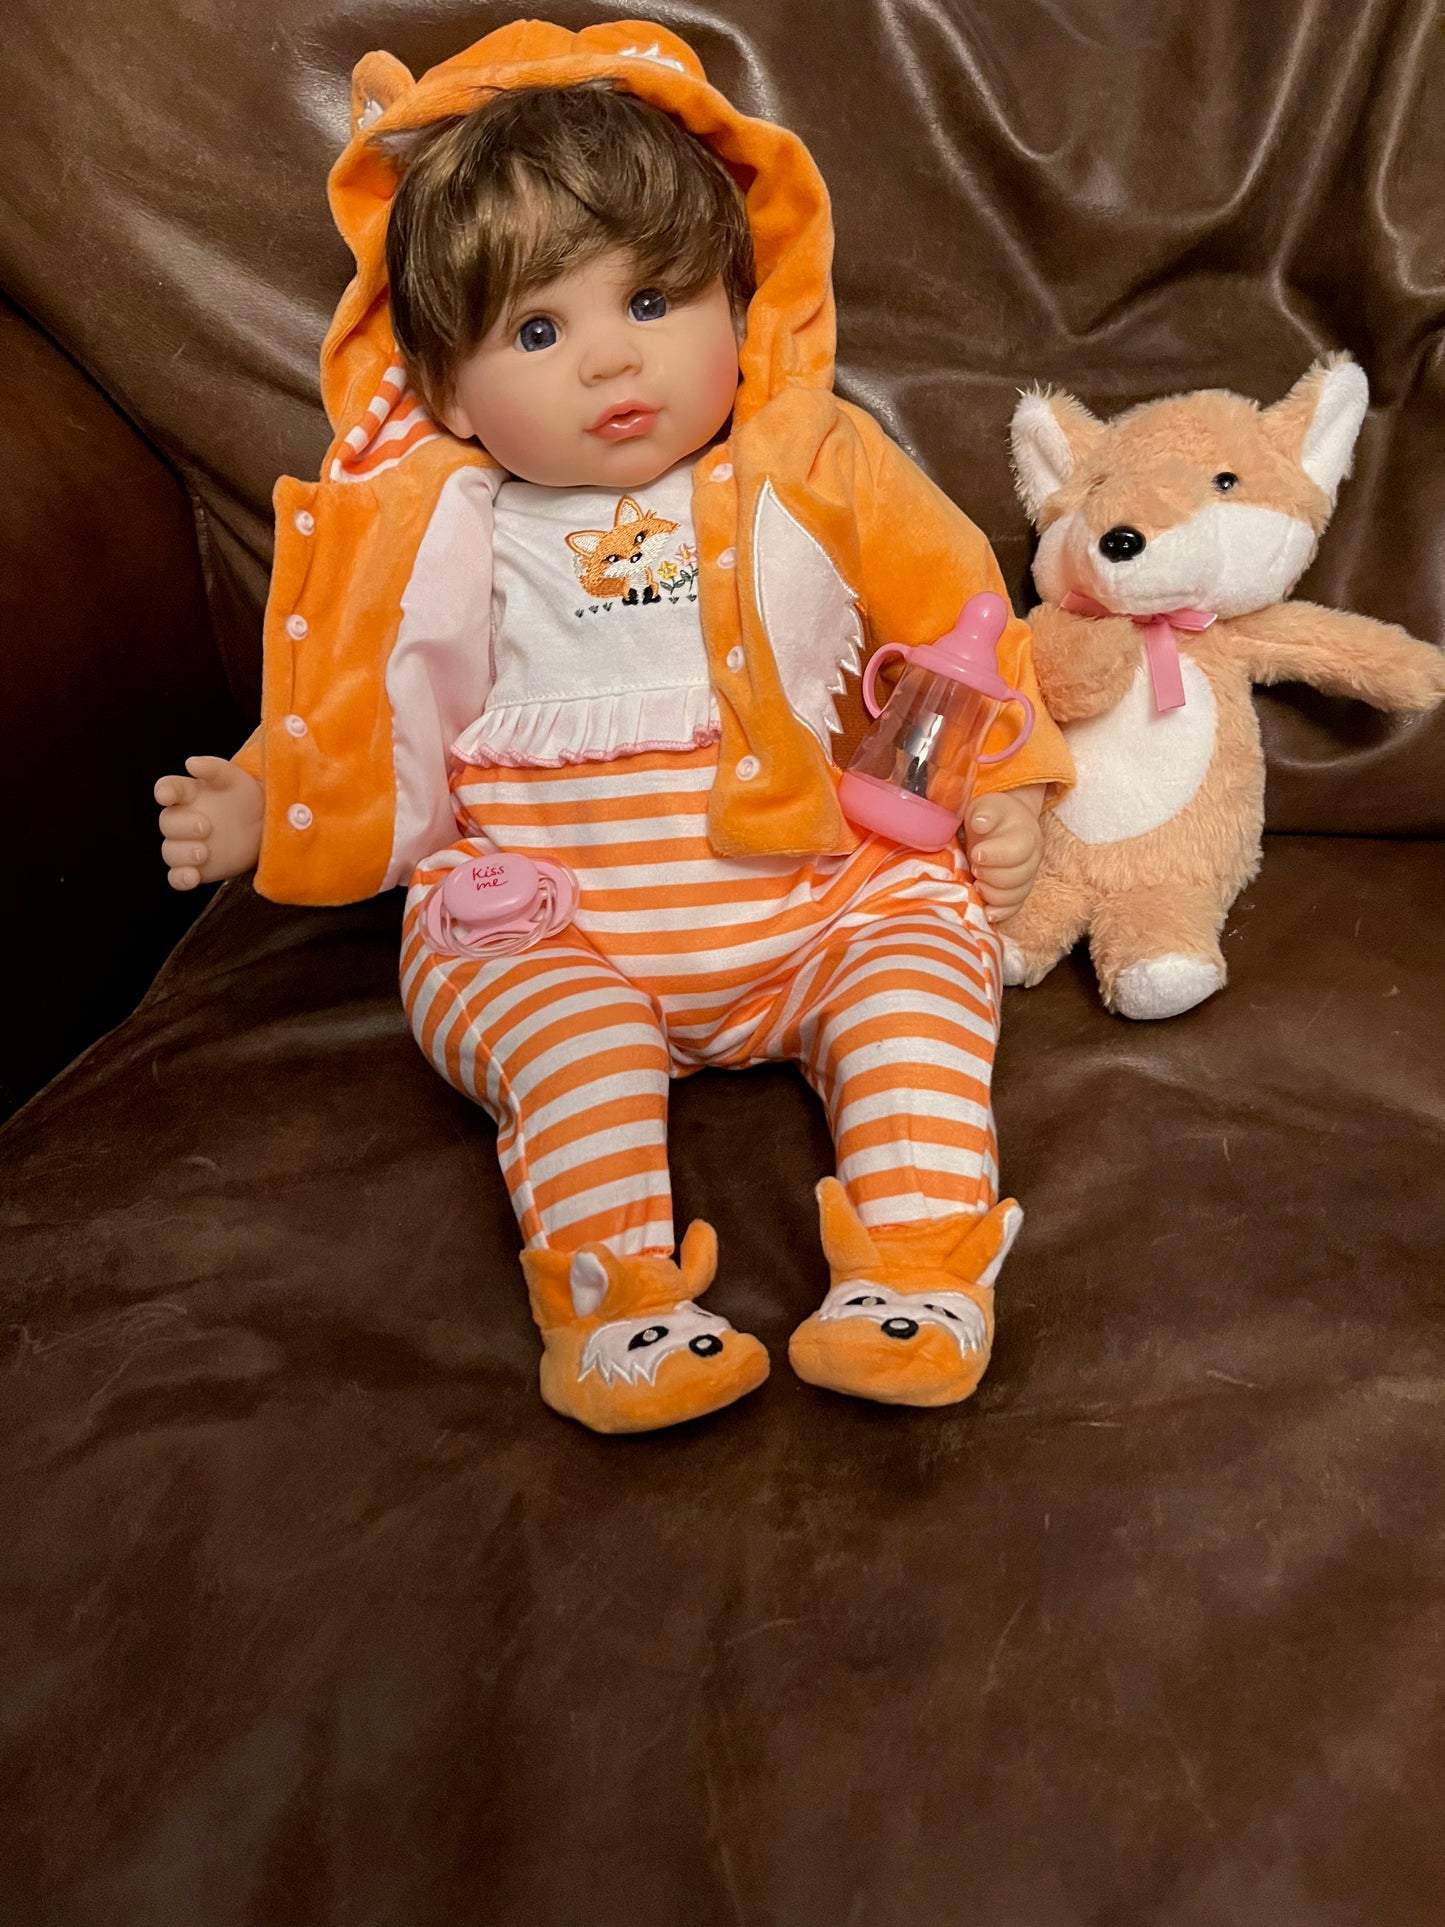 Aori Reborn Baby Doll with feeding accessories